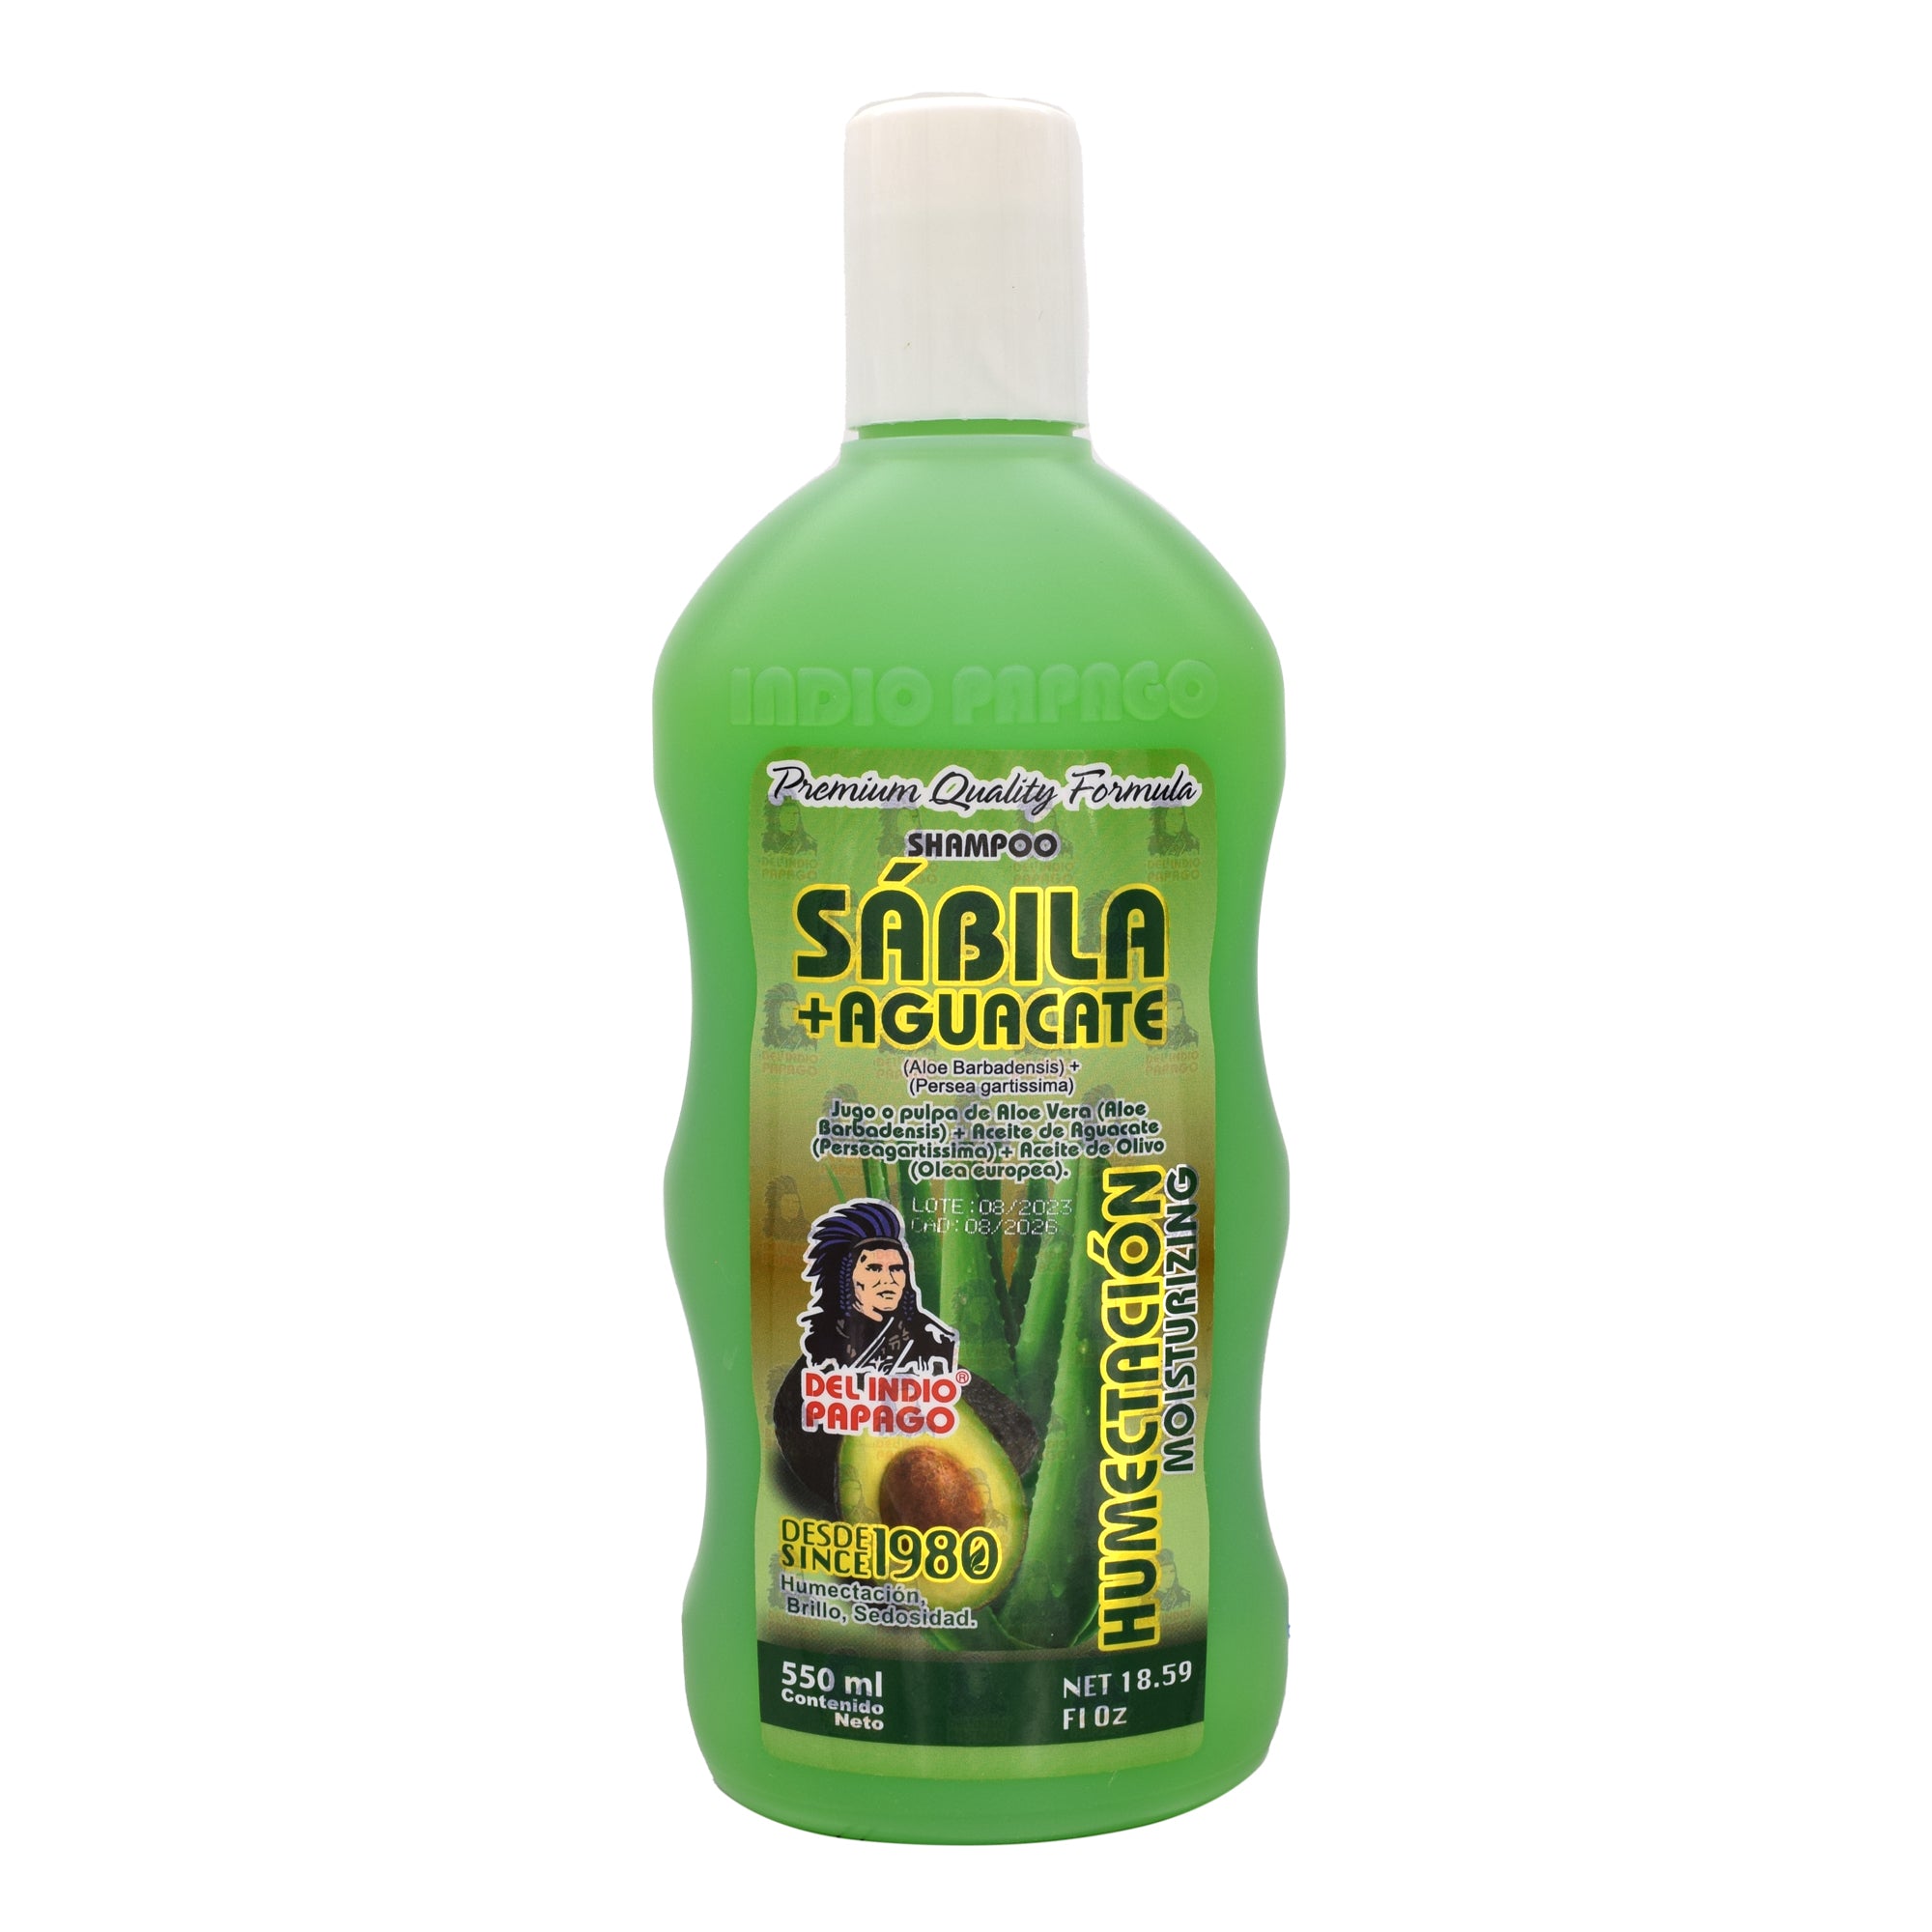 Shampoo sabila indio papago 550 ml